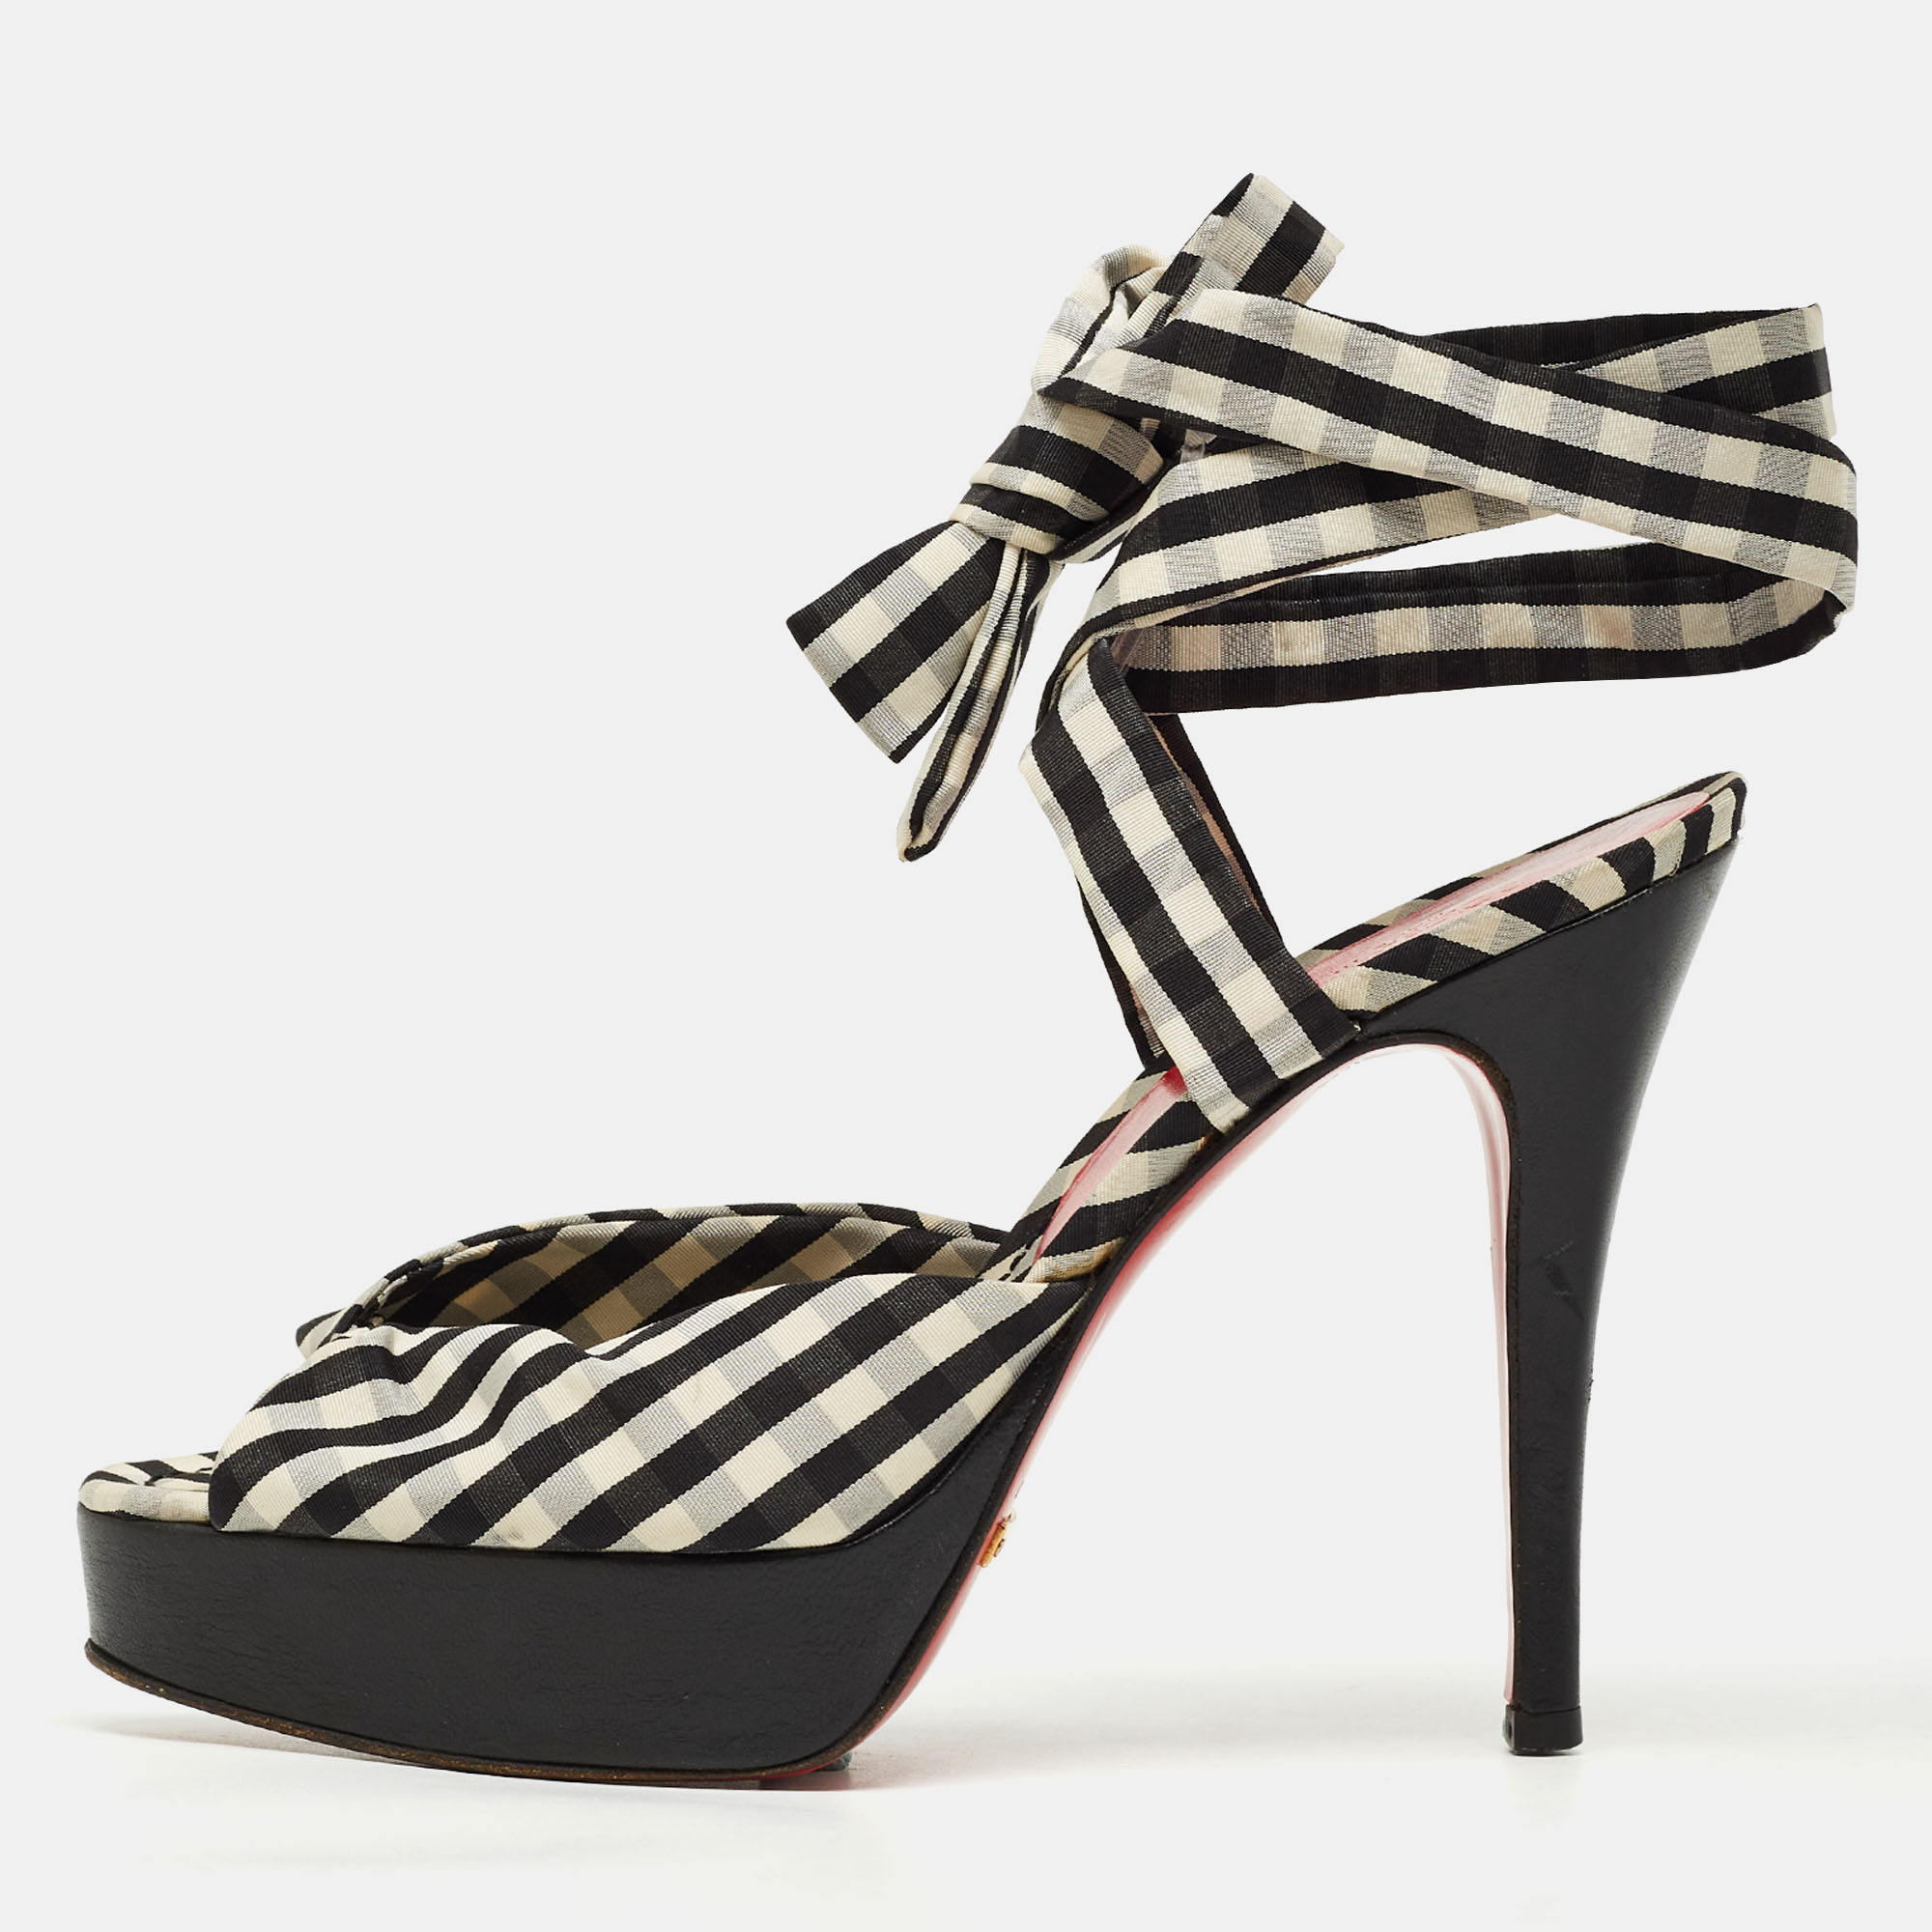 Dolce & gabbana black/white plaid fabric platform ankle tie sandals size 38